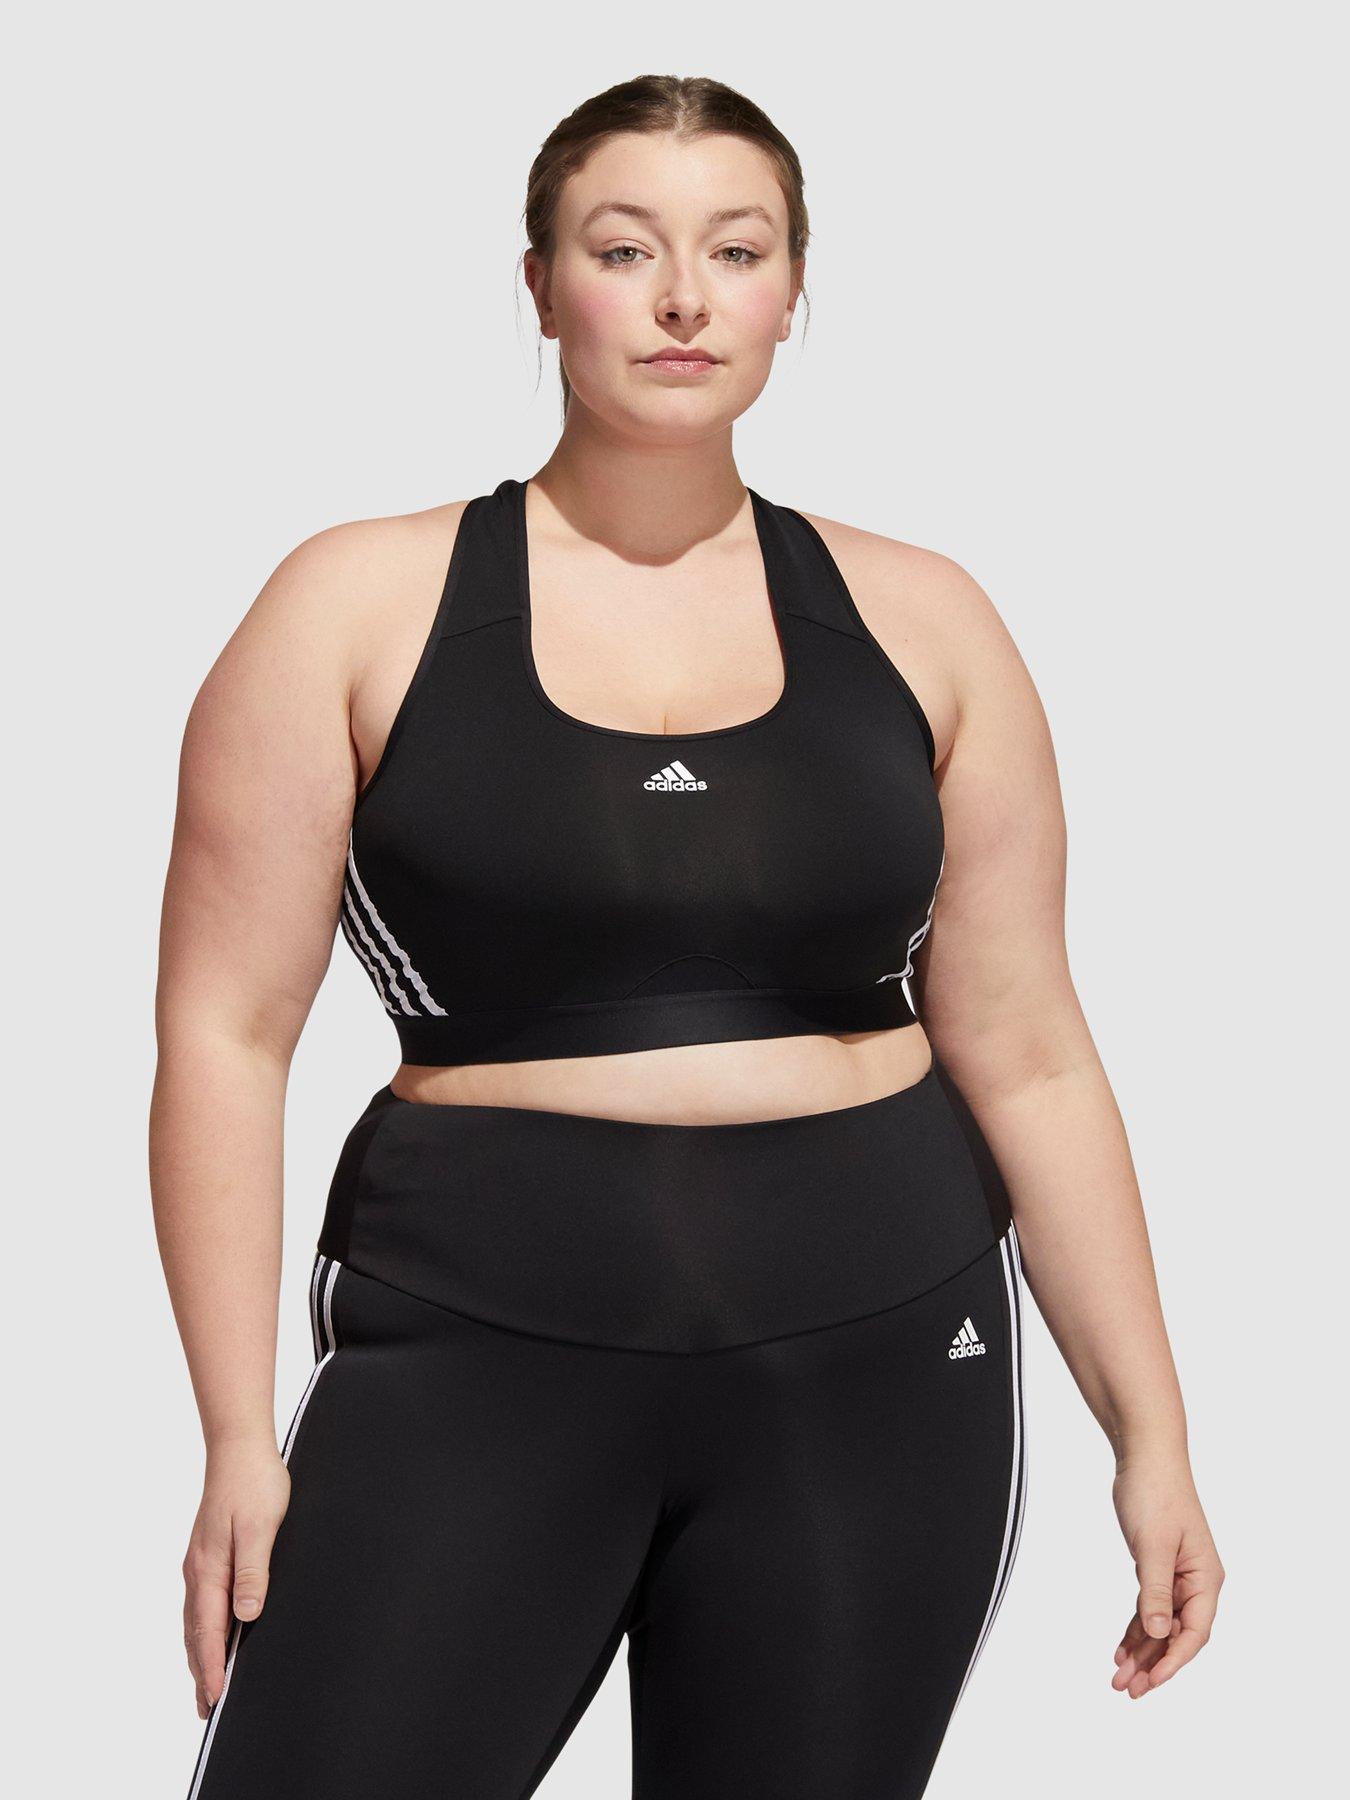 Women's Sports Bra Gym Sportswear Workout Yoga Activewear Tops Black White  Striped Medium